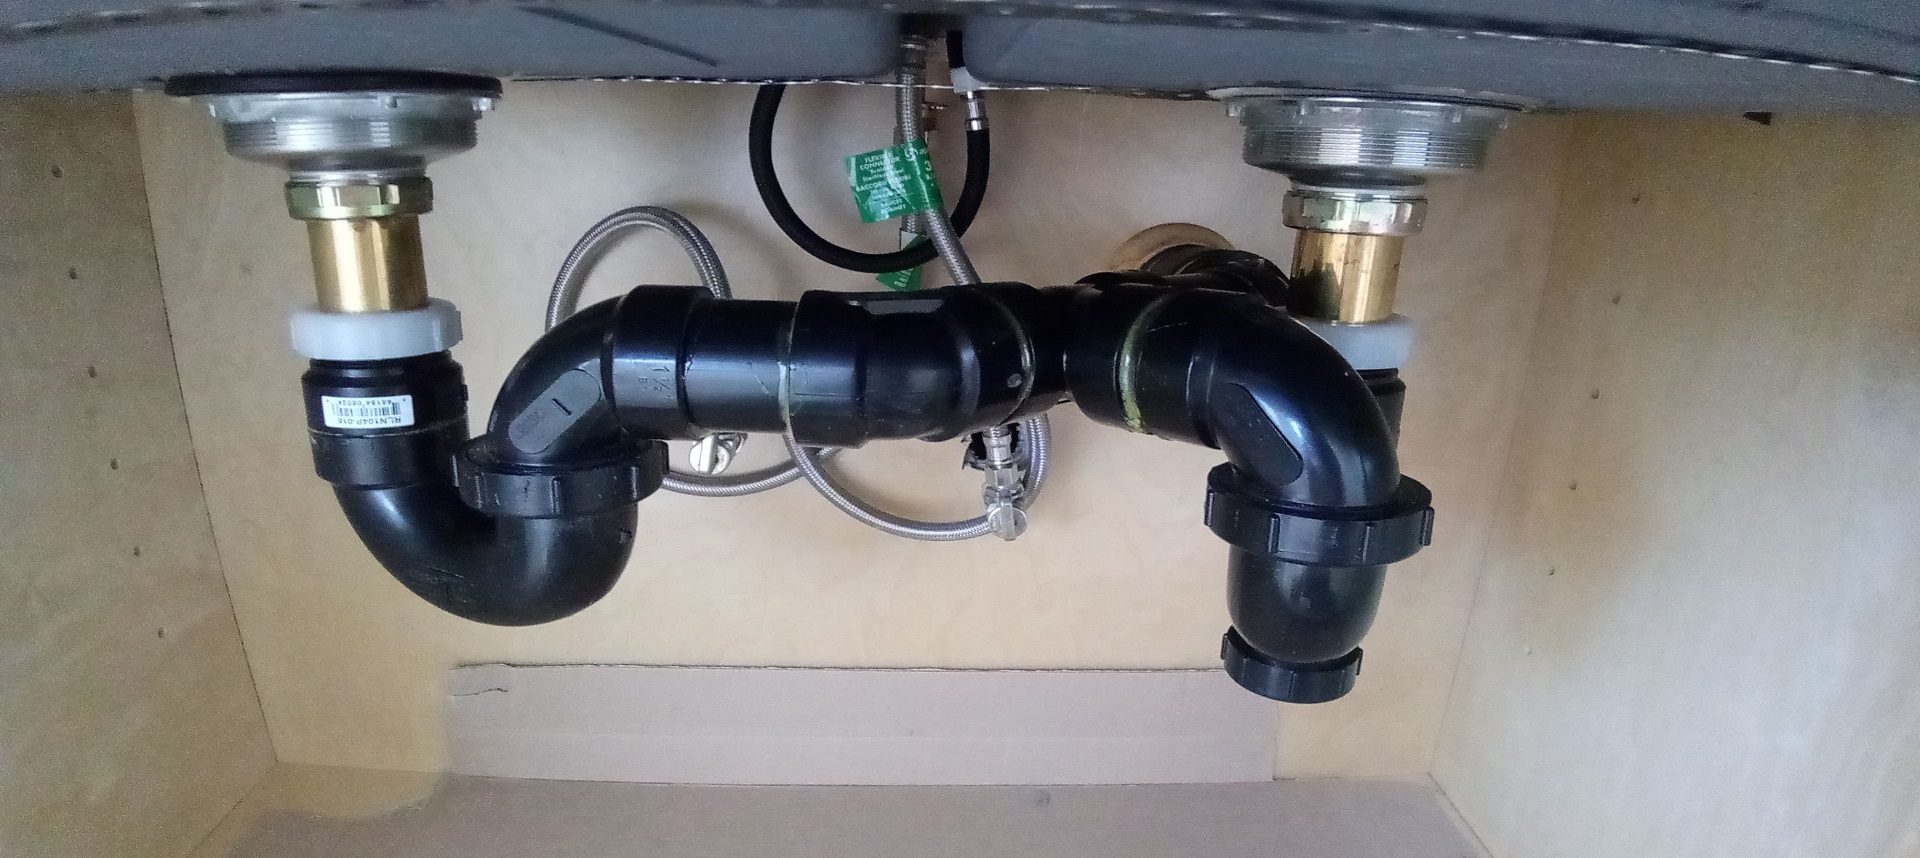 kitchen sink plumbing configurations